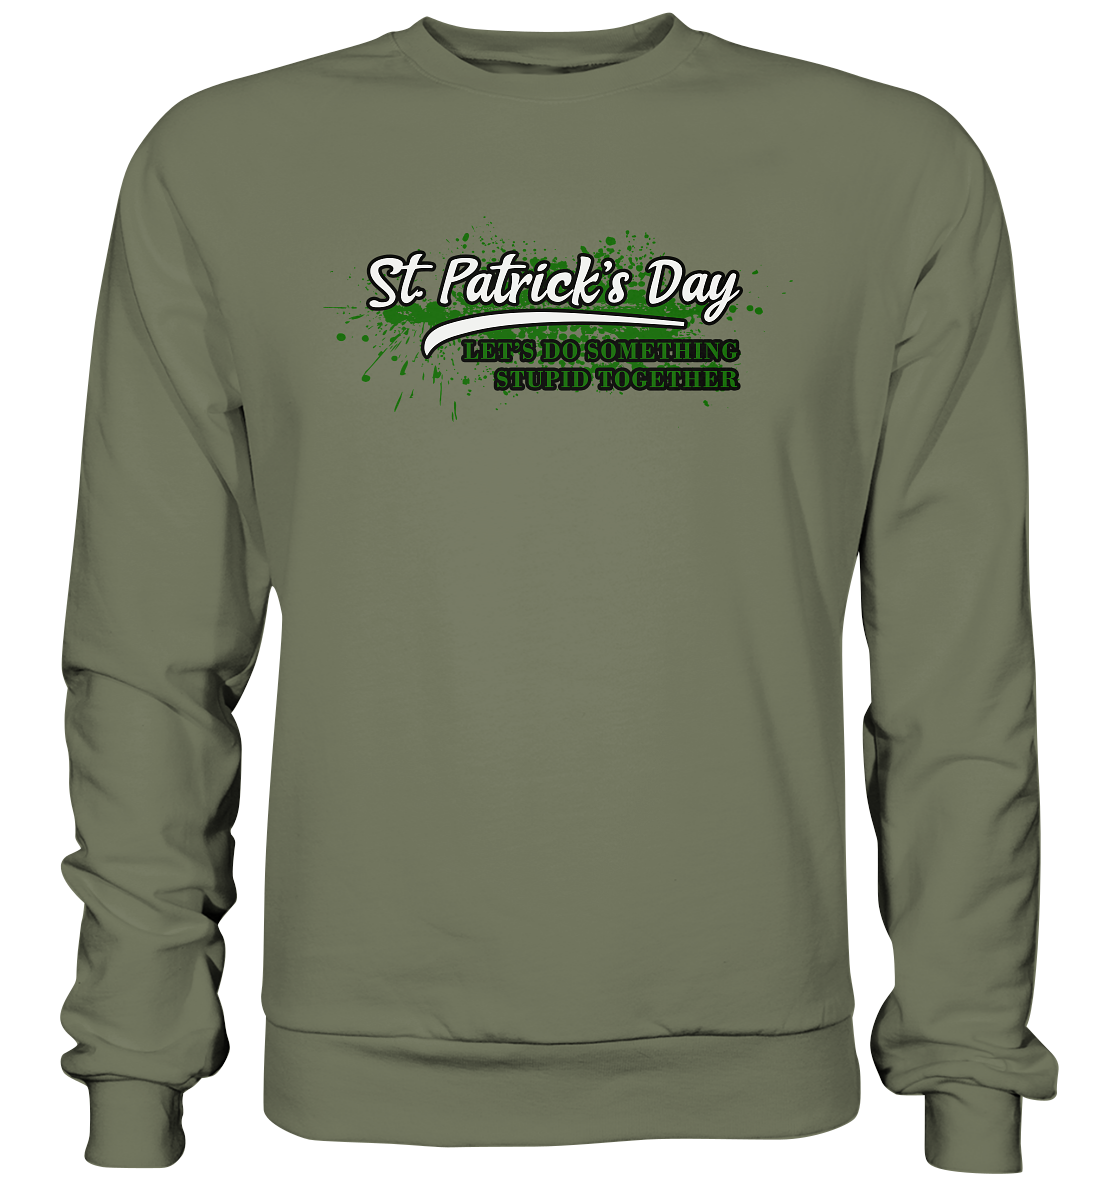 St. Patrick's Day "Let's Do Something Stupid Together" - Premium Sweatshirt